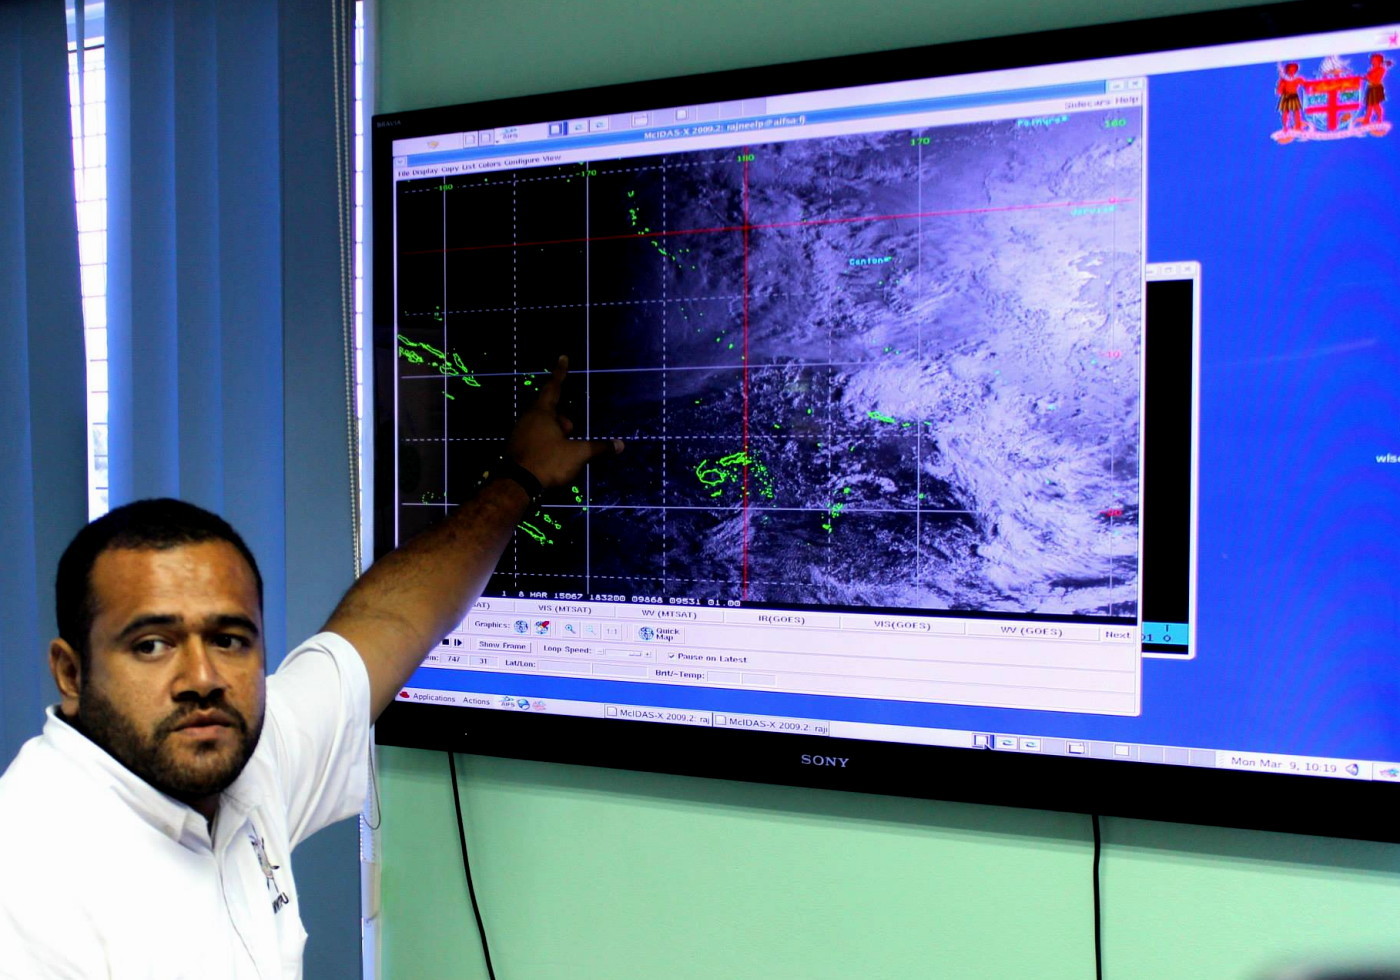 L’inquiétant cyclone « Pam » se forme entre Fidji et Vanuatu